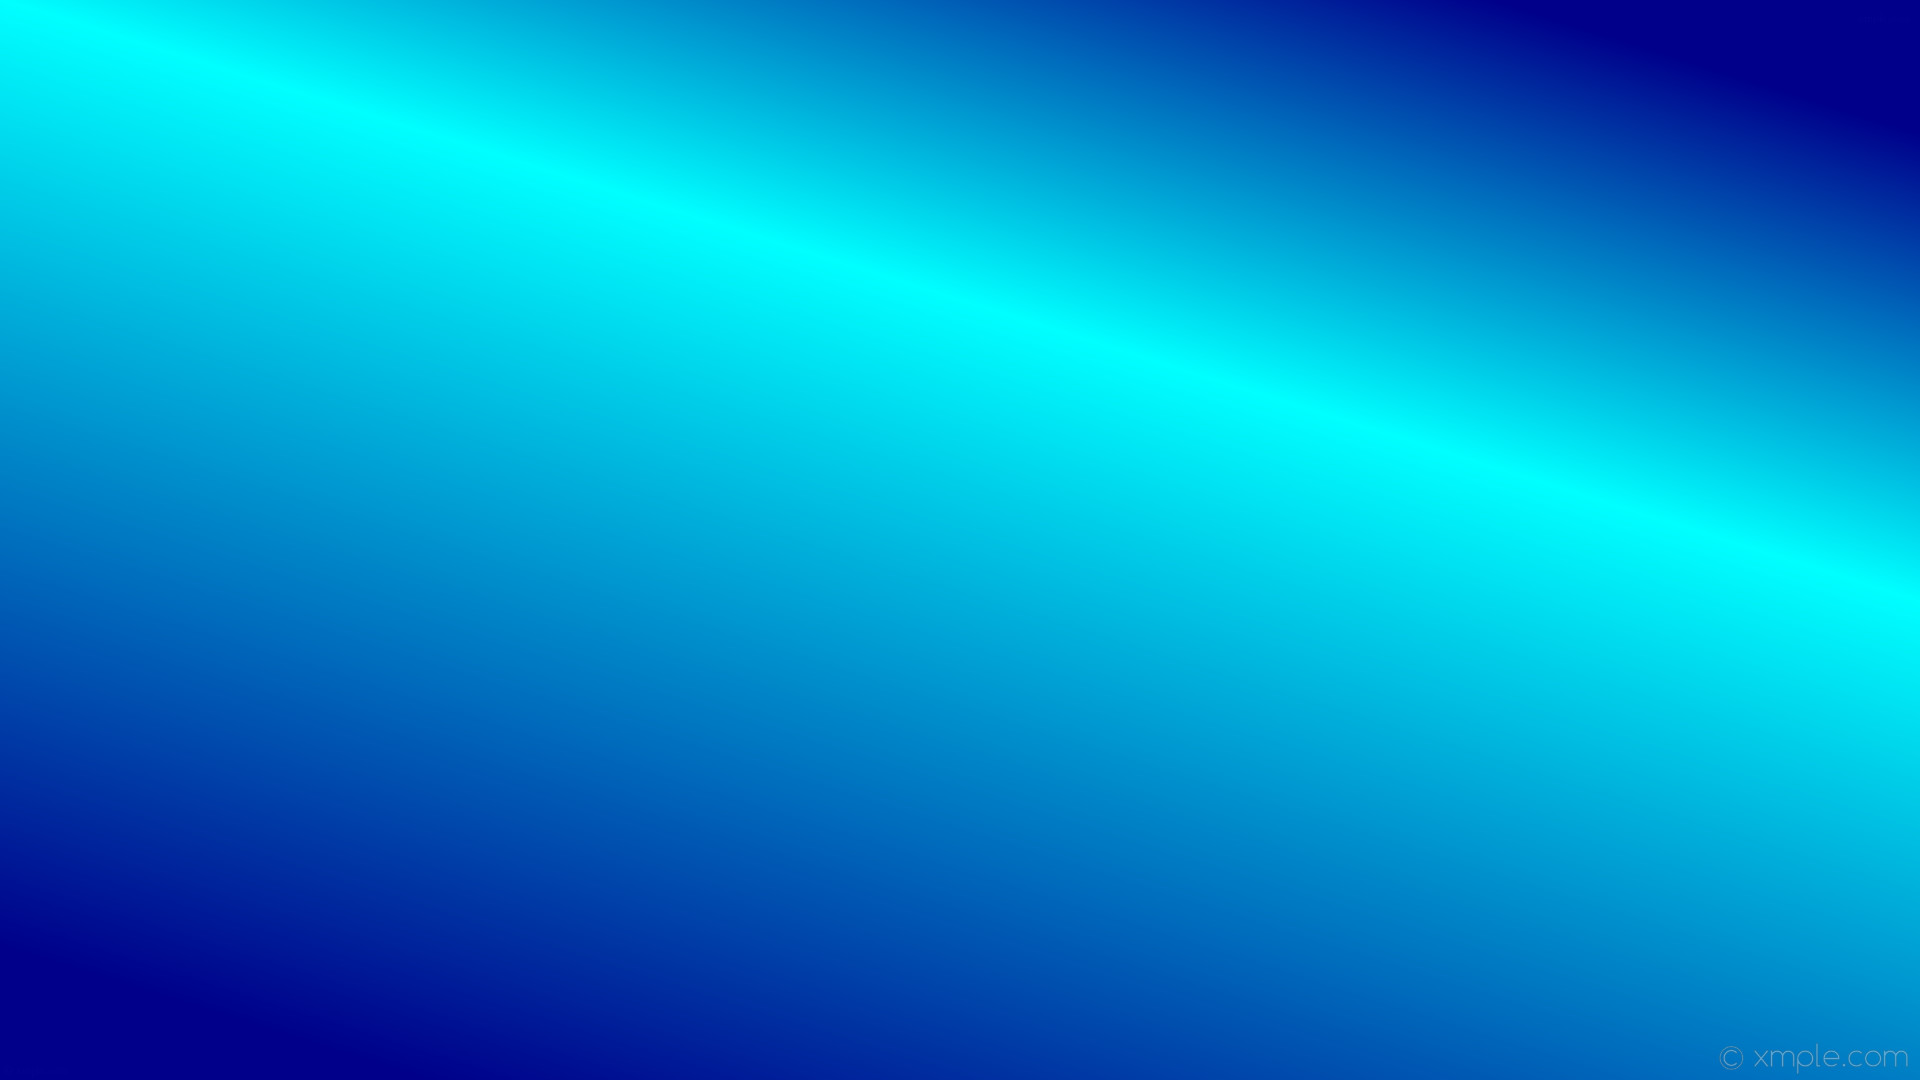 Wallpaper highlight blue gradient linear dark blue aqua cyan b ffff 225 67